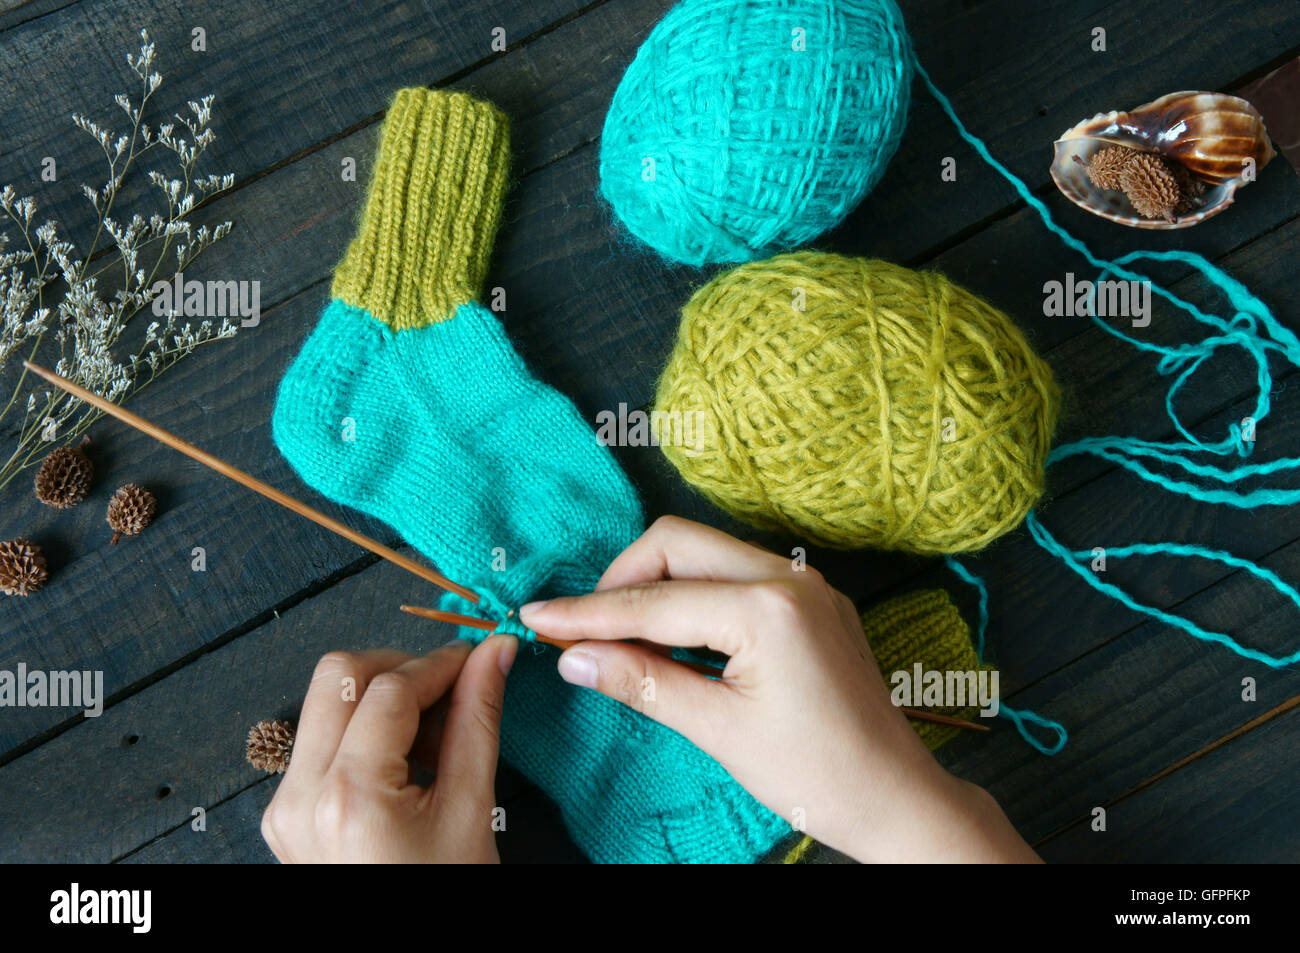 Wool Hand-made Baby Coat, Socks and Teddy Bear Stock Image - Image of  young, handmade: 10368981